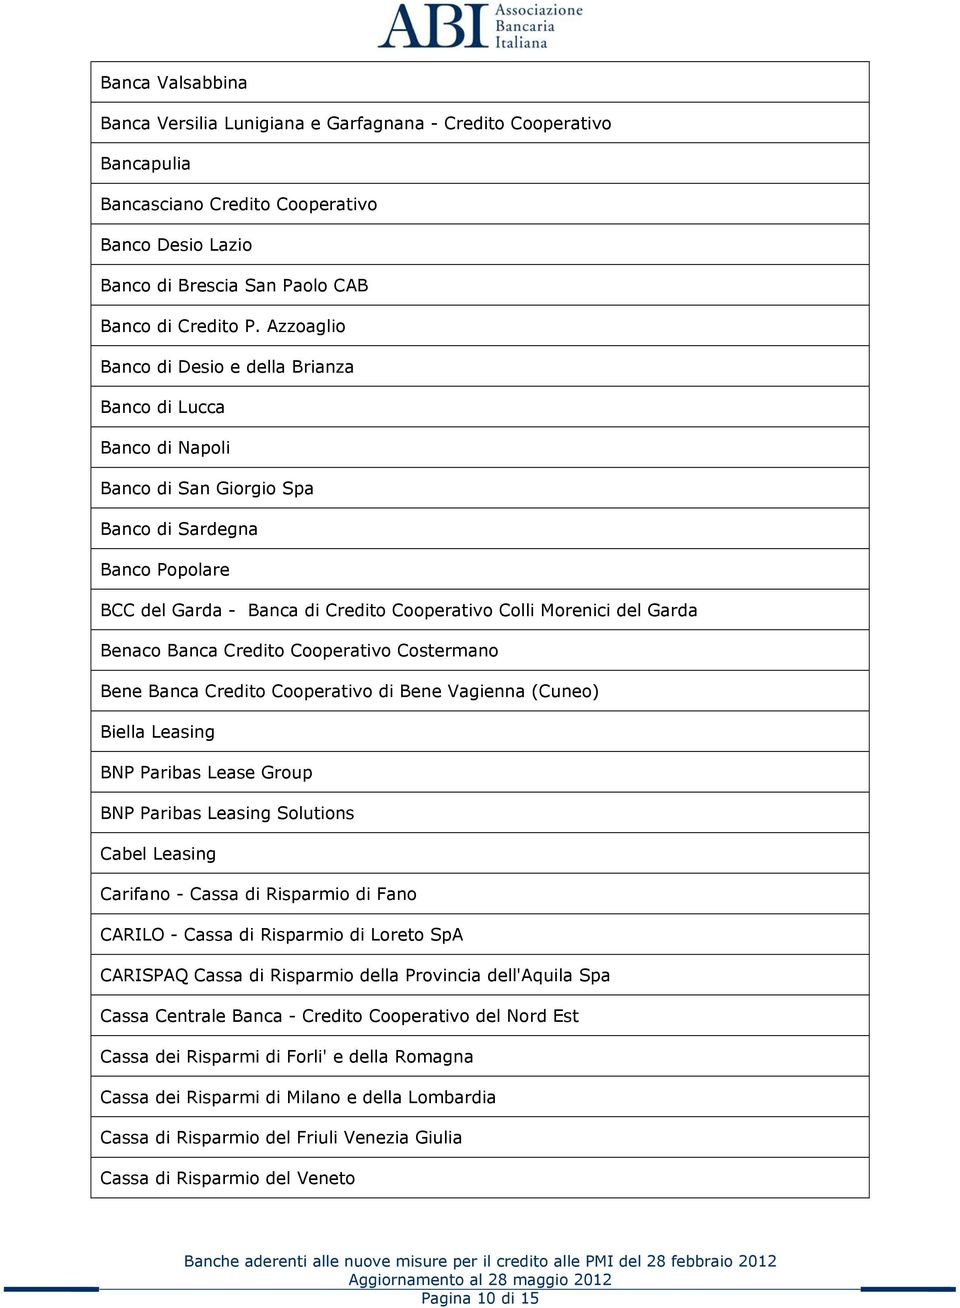 Benaco Banca Credito Cooperativo Costermano Bene Banca Credito Cooperativo di Bene Vagienna (Cuneo) Biella Leasing BNP Paribas Lease Group BNP Paribas Leasing Solutions Cabel Leasing Carifano - Cassa